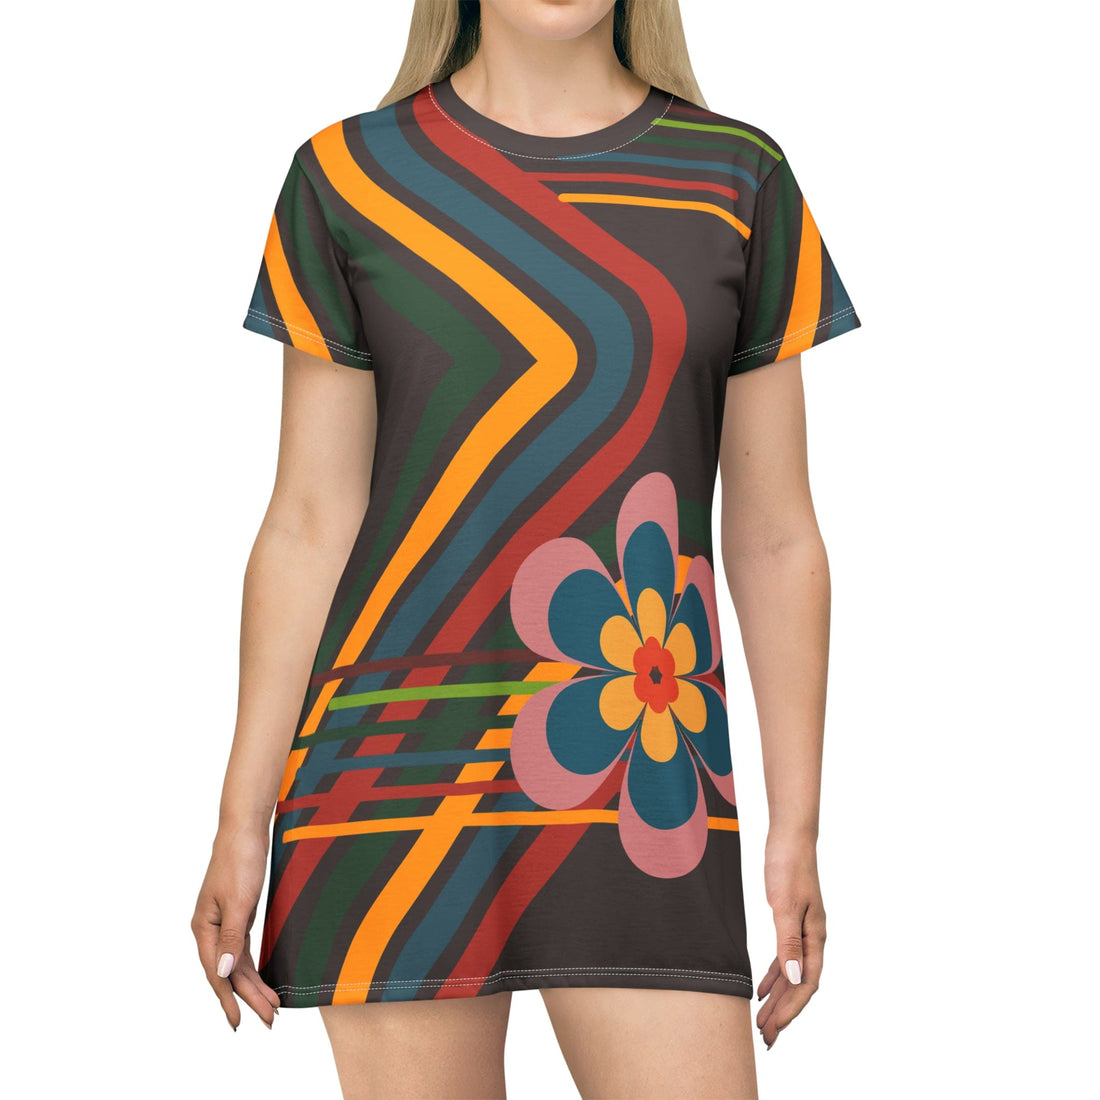 Kate McEnroe New York Mid Mod Retro Flower Power Party Dress, Brown, Orange, Yellow, Blue Geometric Mid Century Modern T - Shirt DressDresses21606554111726217291